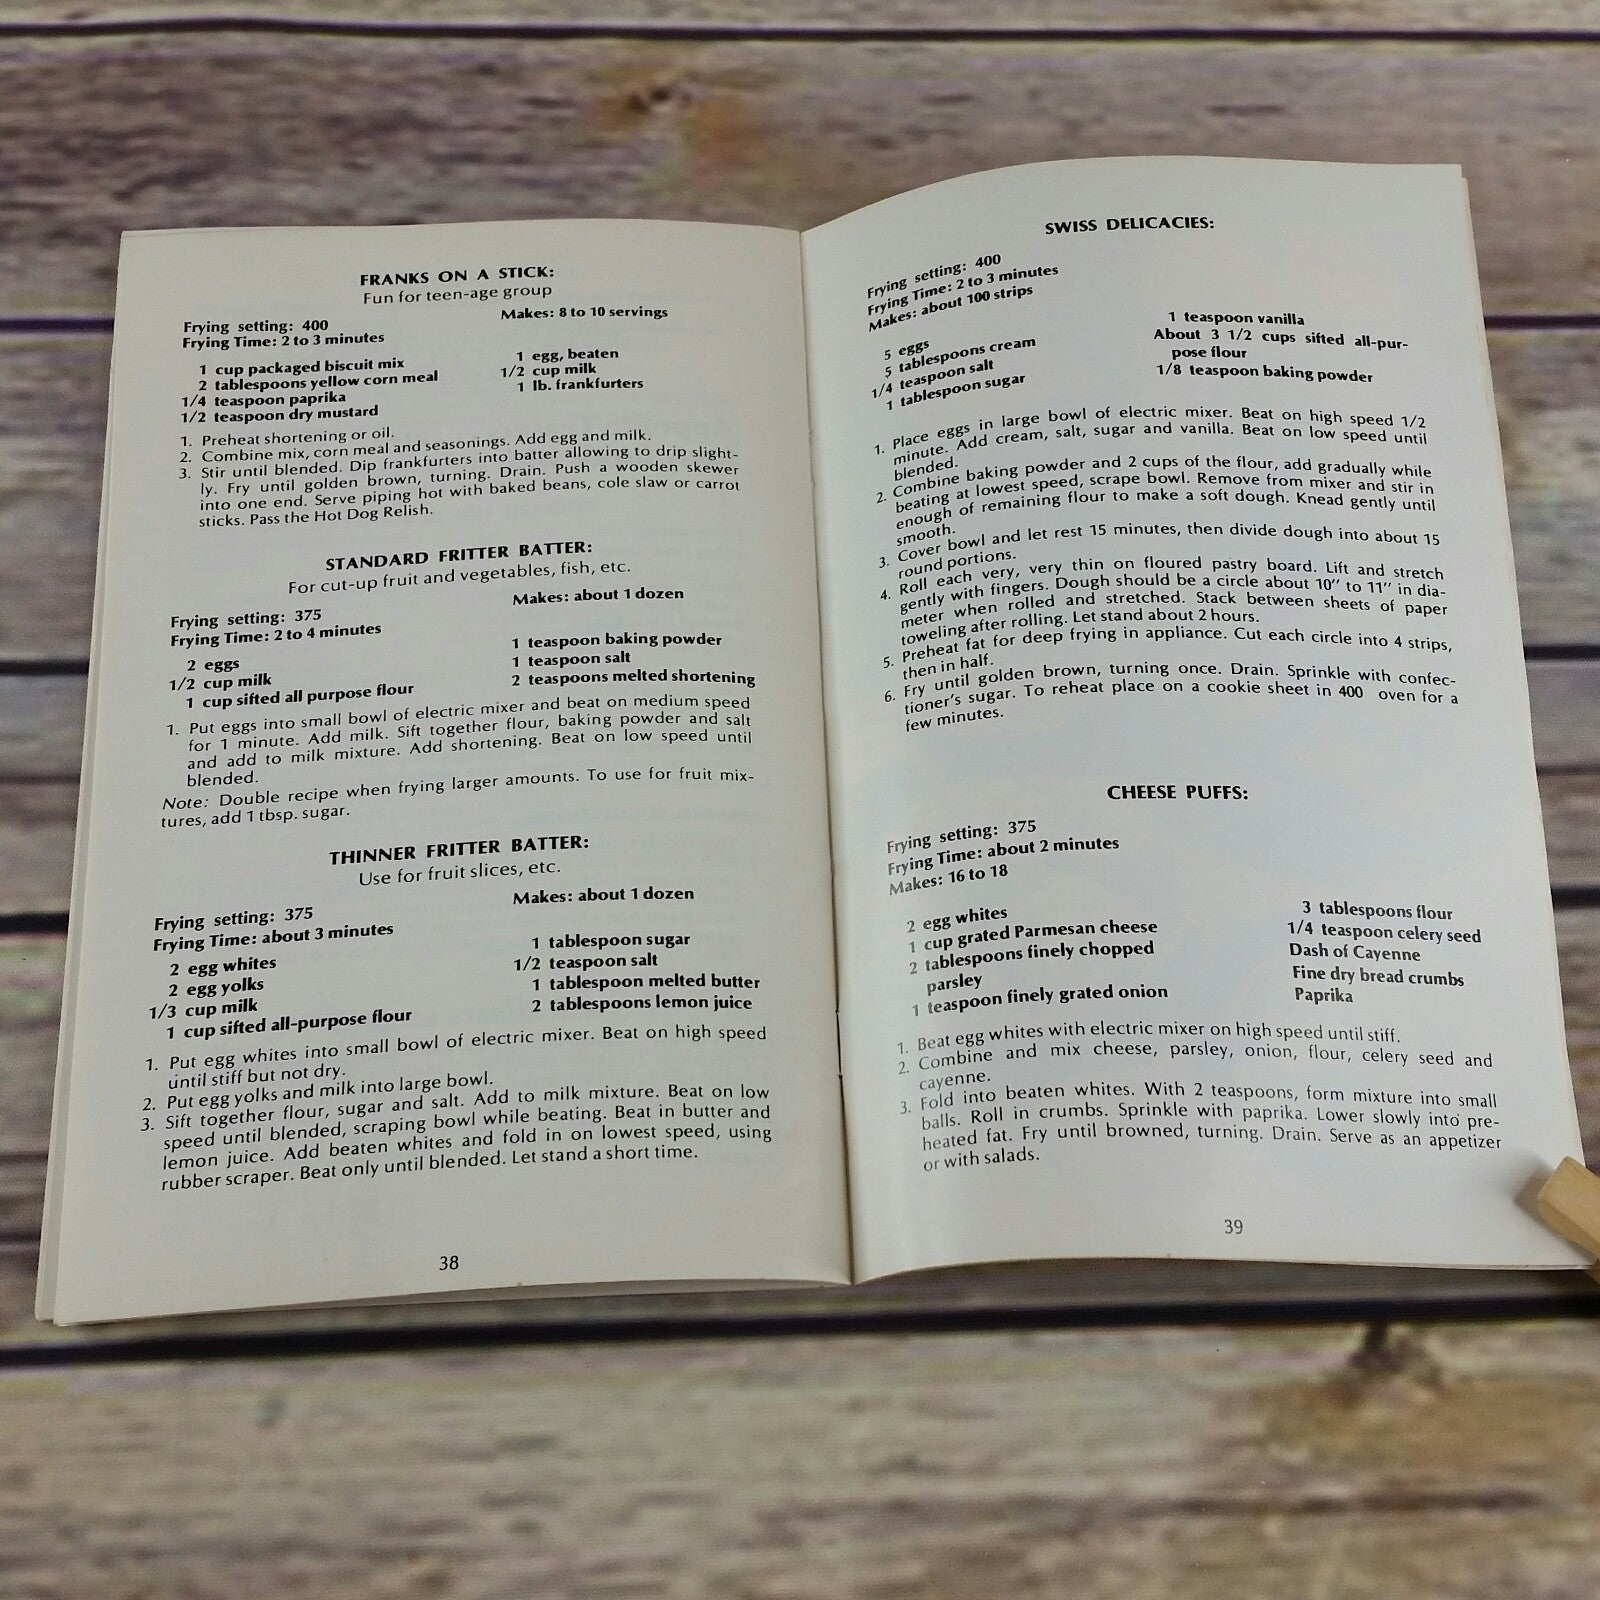 Sunbeam Crocker Cooker Fryer Vintage Cookbook Recipes and Instructions Manual 1976 Paperback Booklet - At Grandma's Table